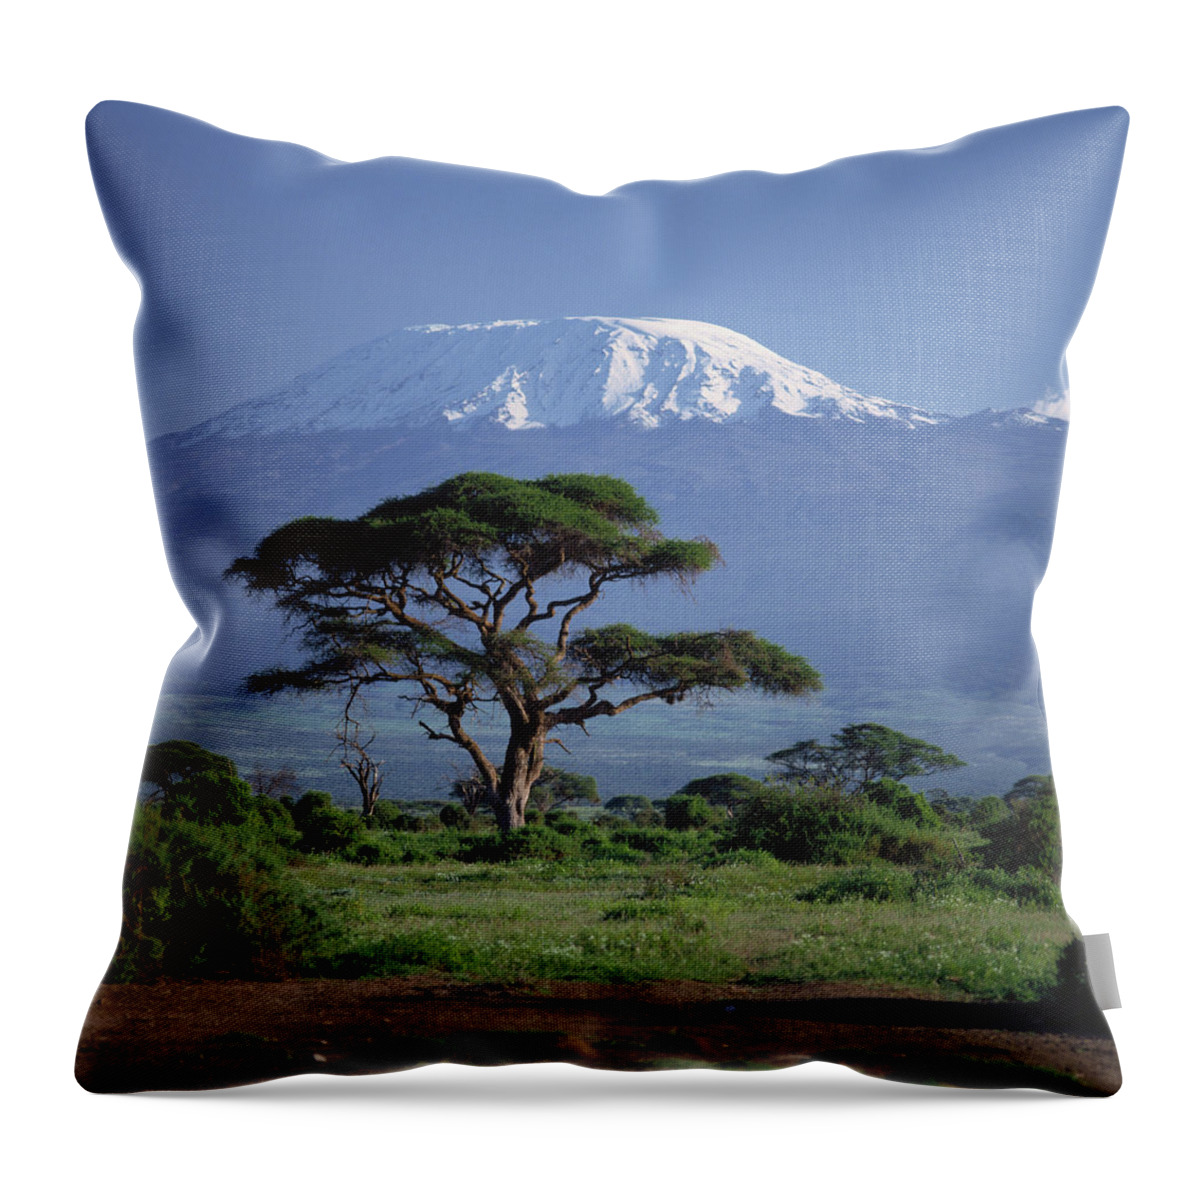 Estock Throw Pillow featuring the digital art Umbrella Thorn Acacia Tree by Fridmar Damm